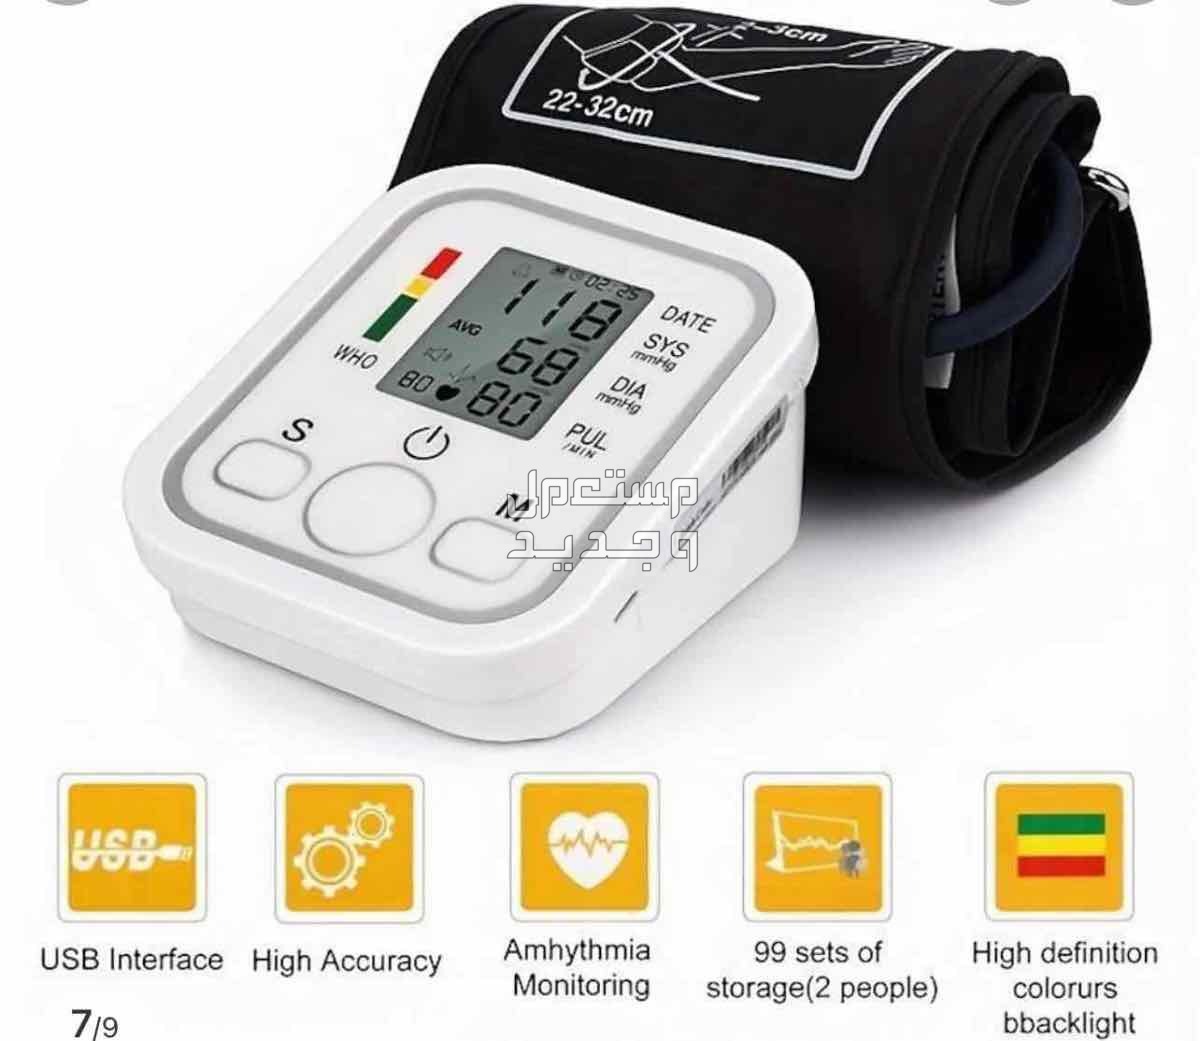 digital blood pressure monitoring  in Muharraq at a price of 9 BHD